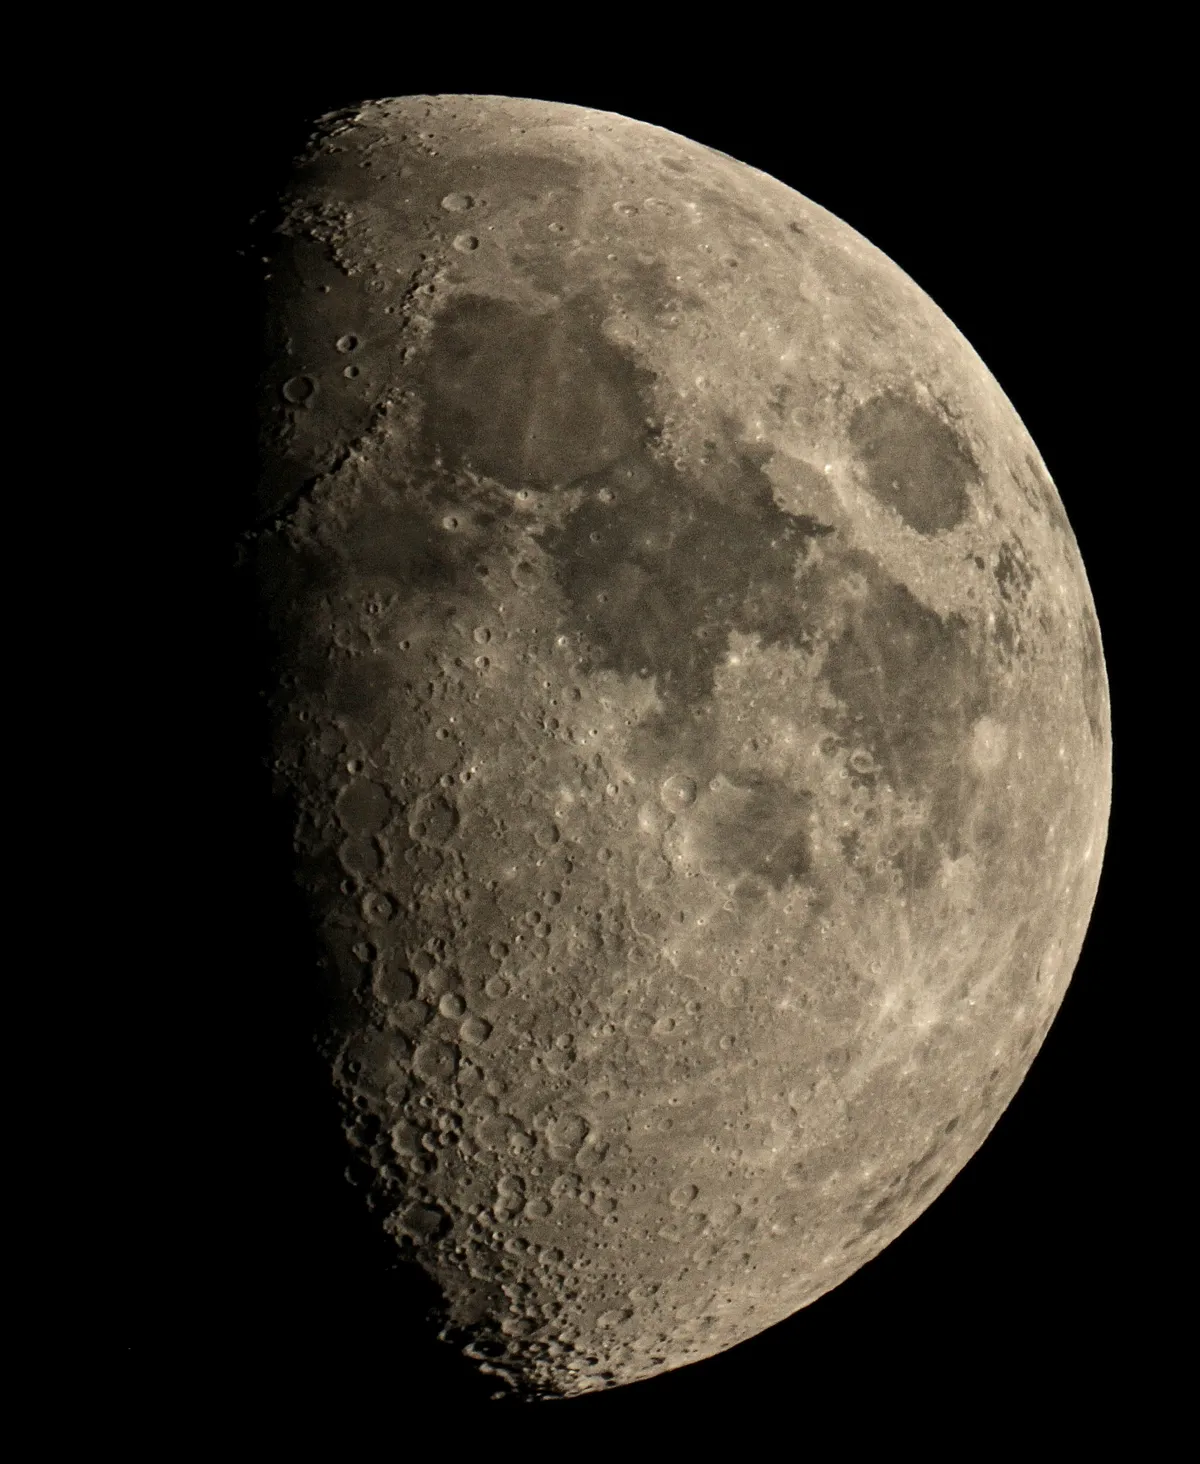 Solstice Moon by Sarah & Simon Fisher, Bromsgrove, Worcestershire, UK. Equipment: Canon 600D, Mak 127mm scope, prime focus single shot.